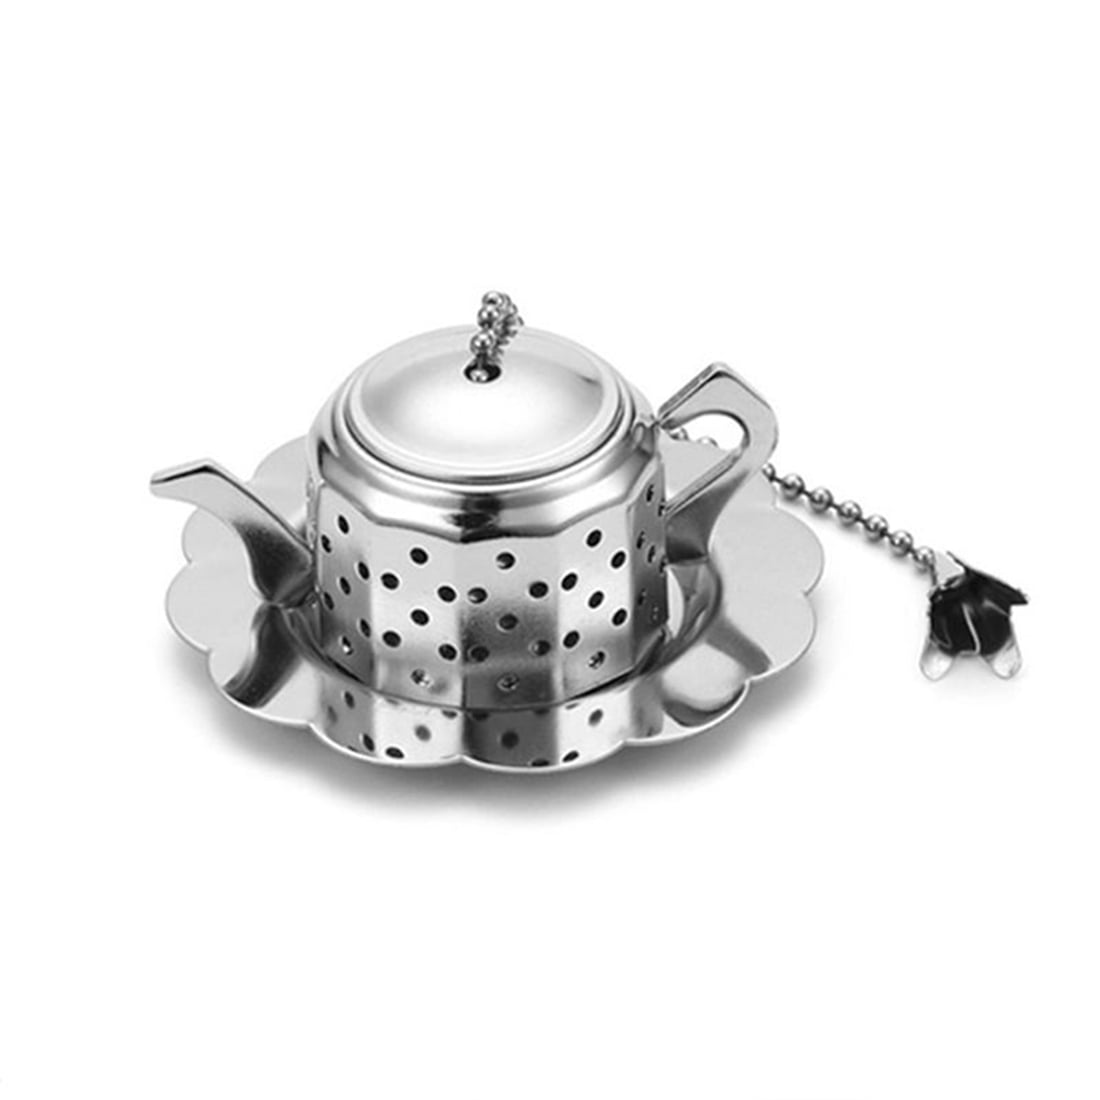 Cute Stainless Steel Teapot Tea Infuser Spice Drink Strainer Herbal Filter^m^